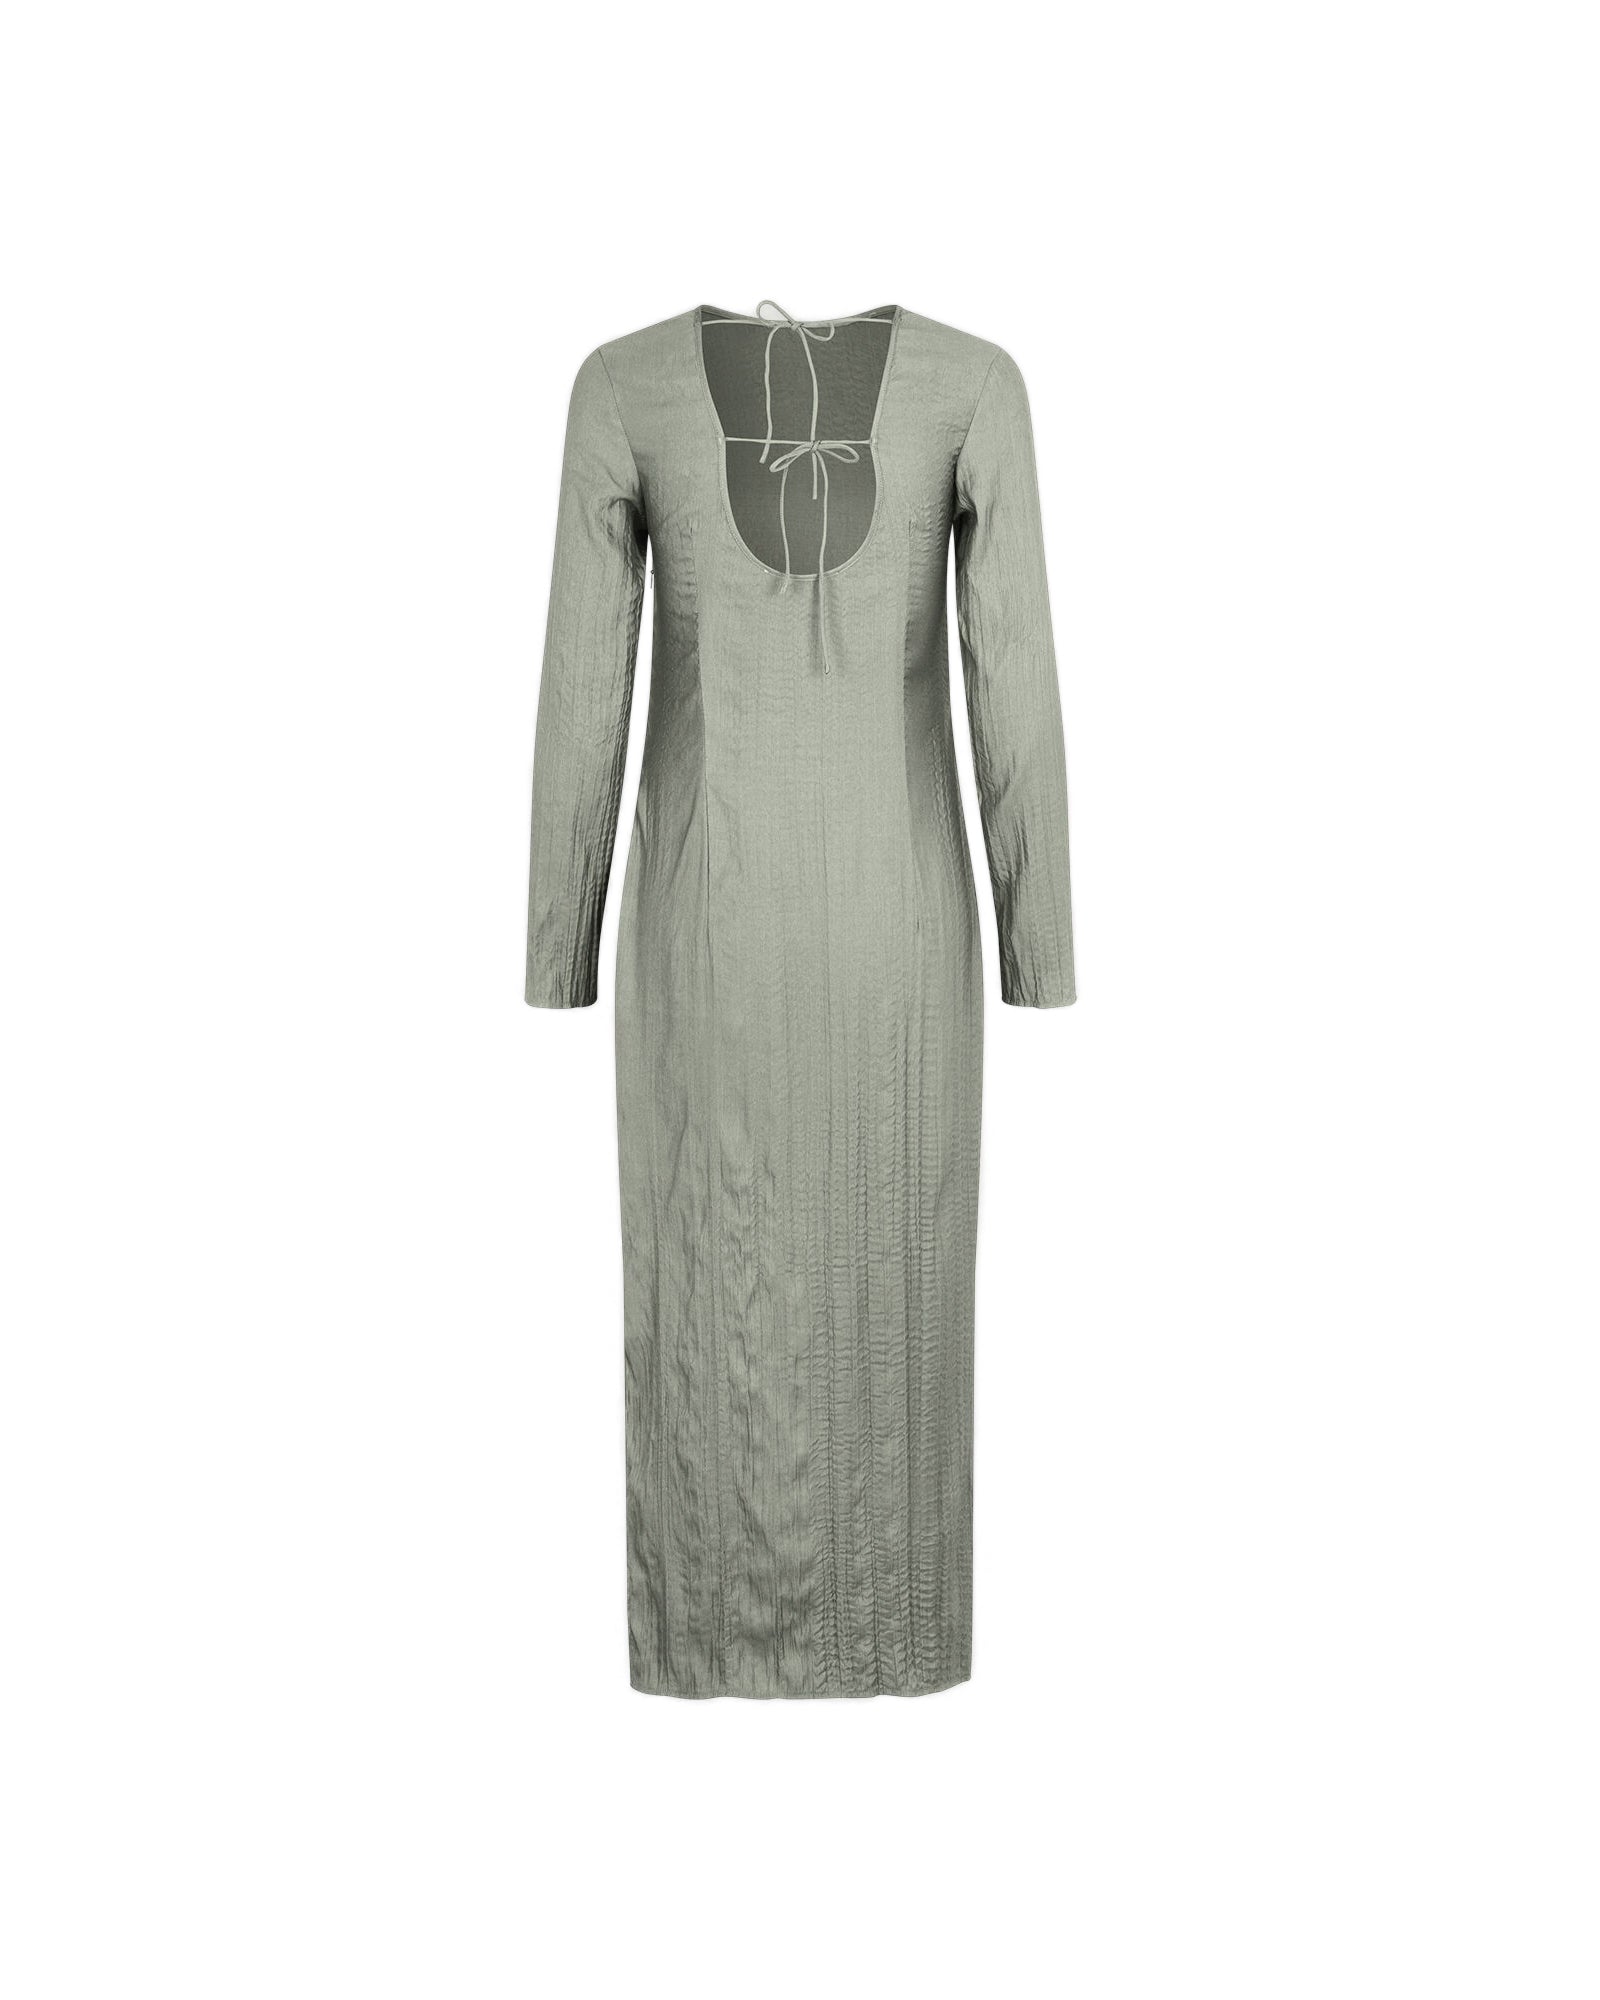 Saisabel 15158 Dress - Dusty Olive